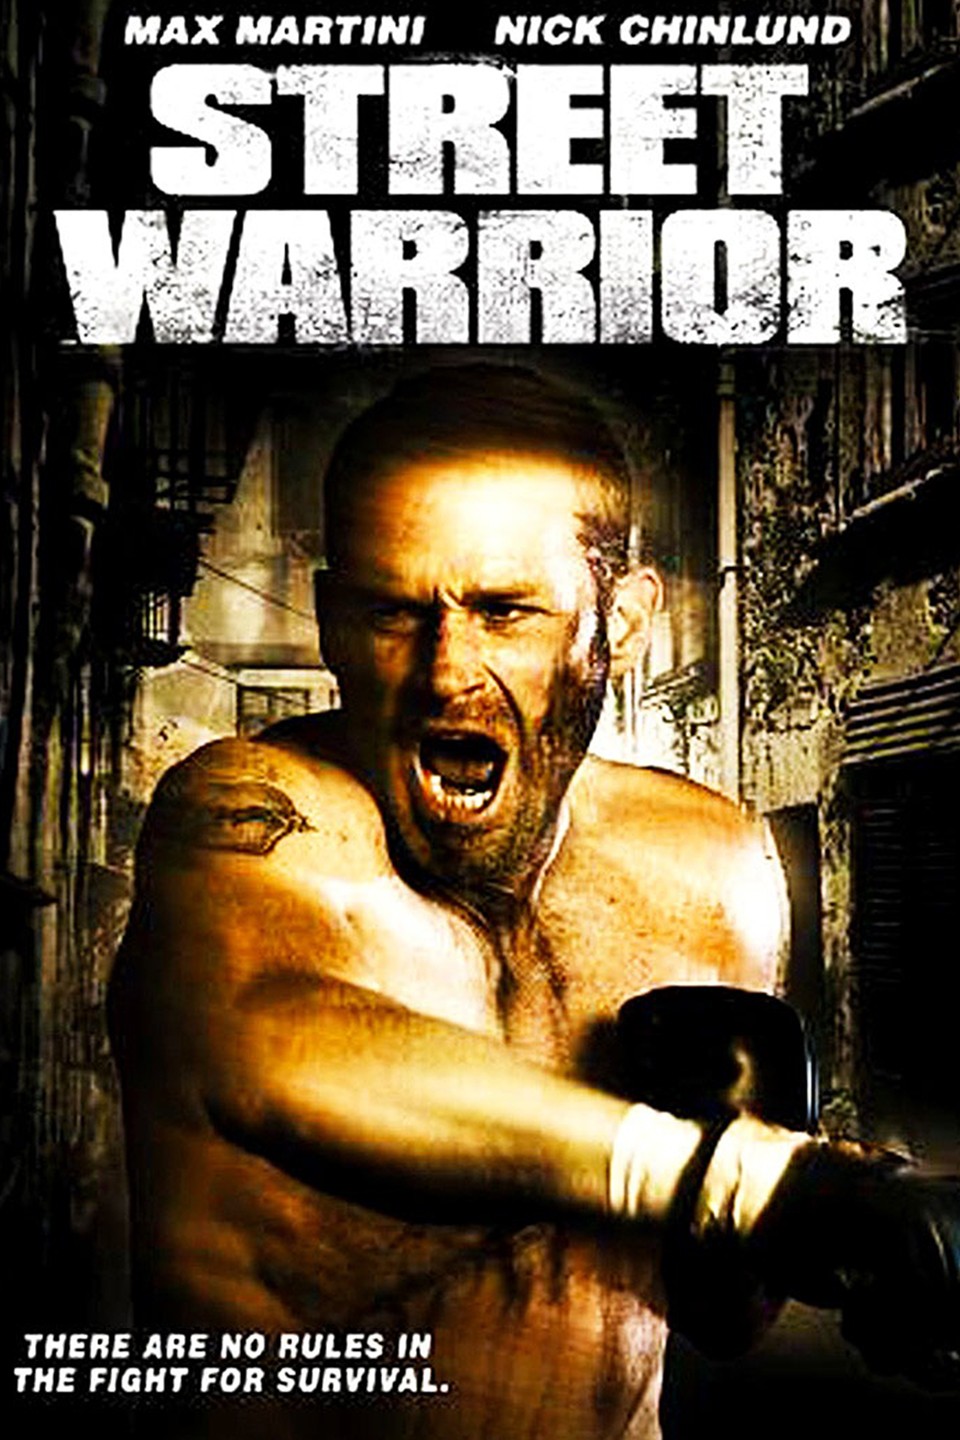 Warrior - Rotten Tomatoes